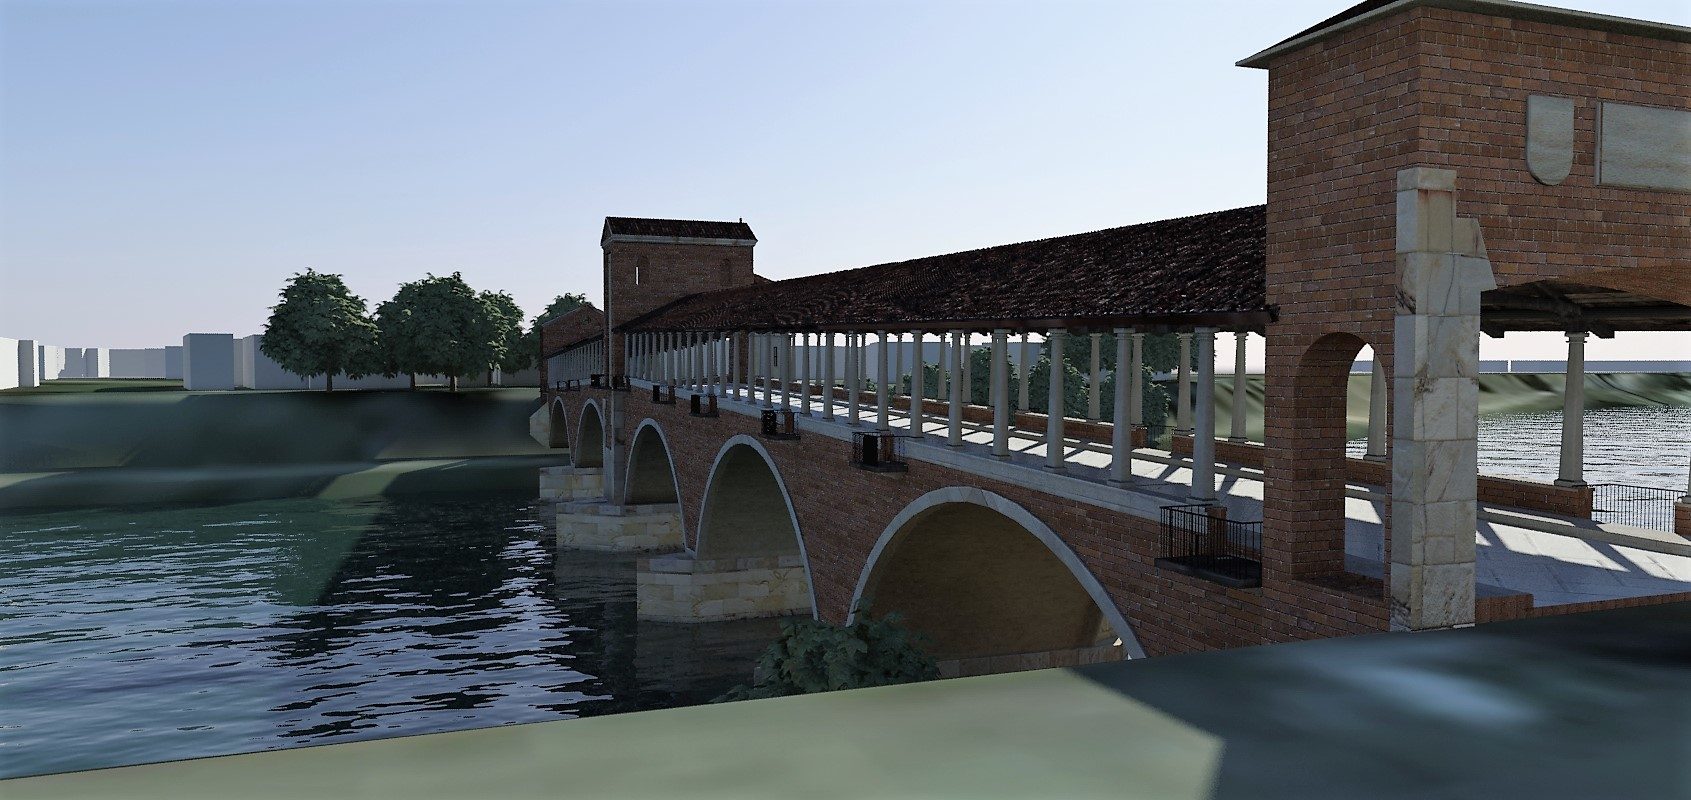 Permalink to: Pavia – Ponte coperto – Simulazione diurna